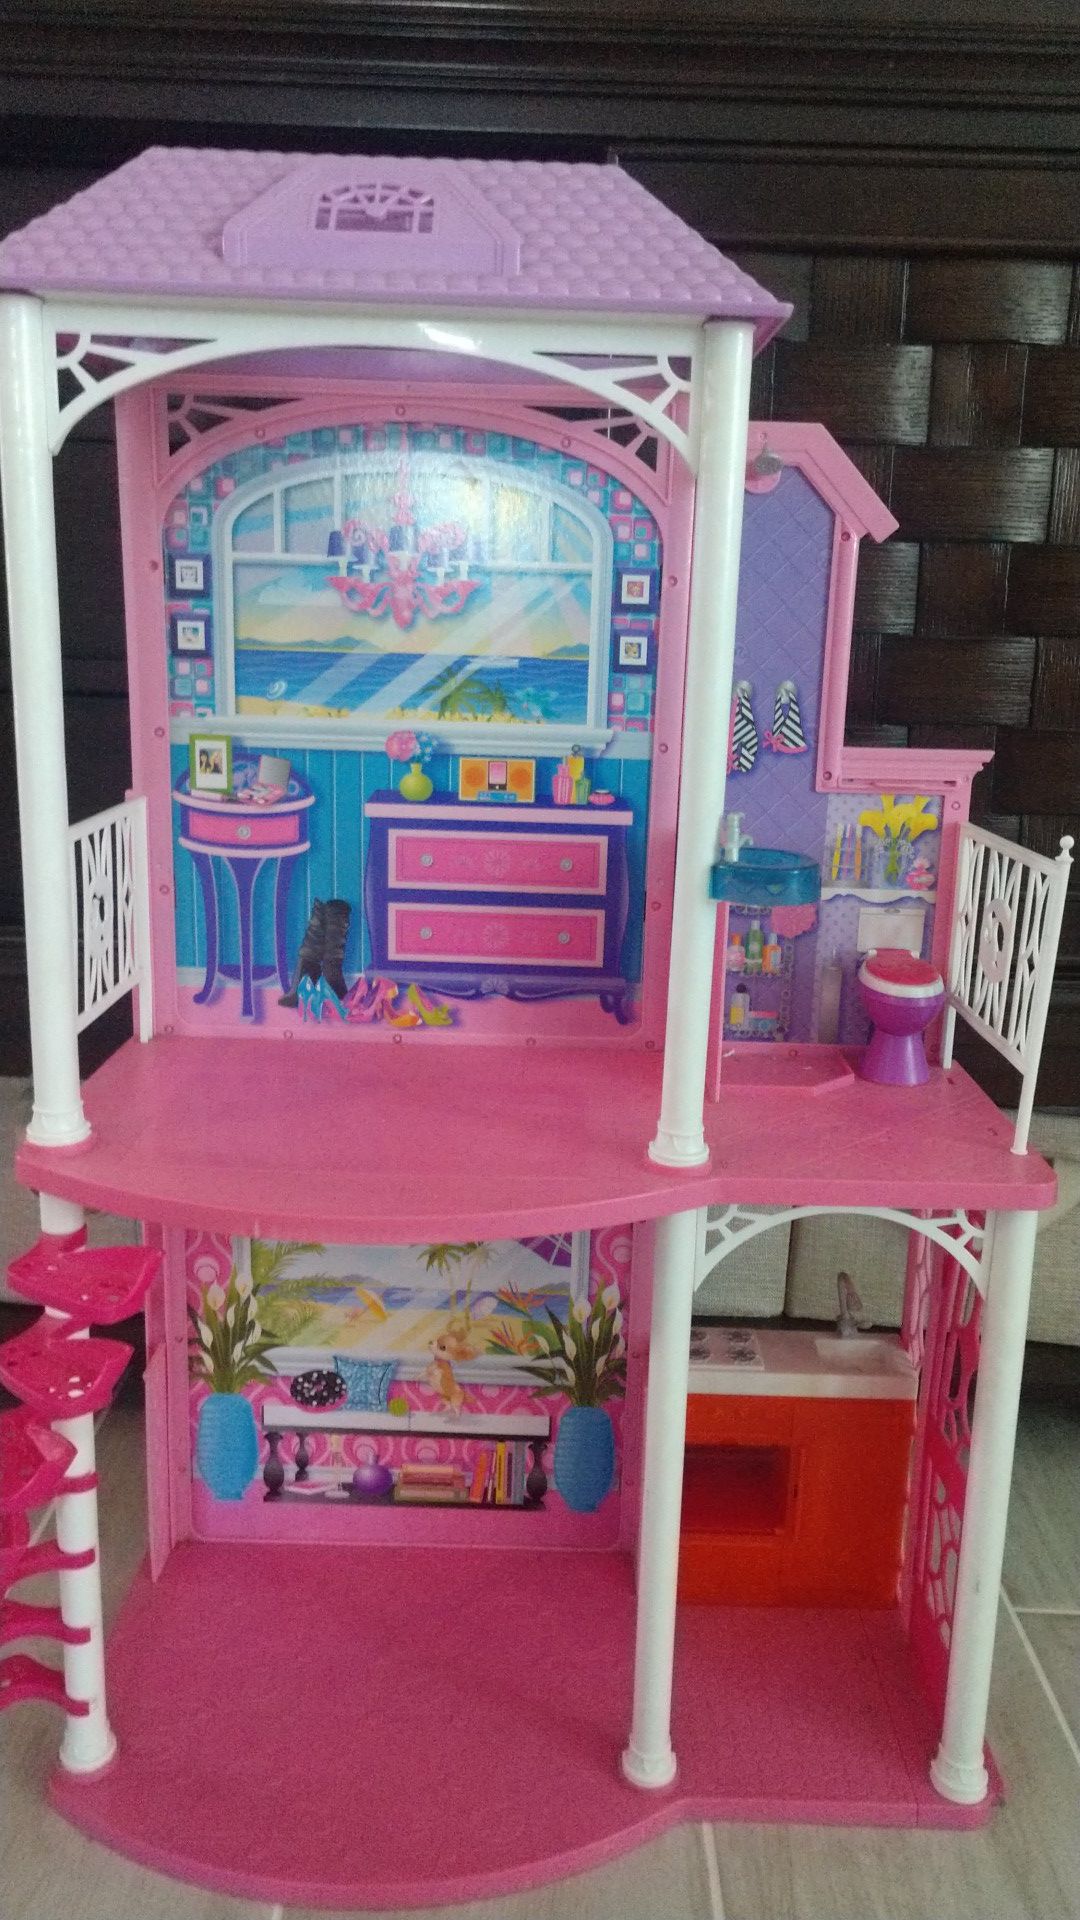 Barbie doll house